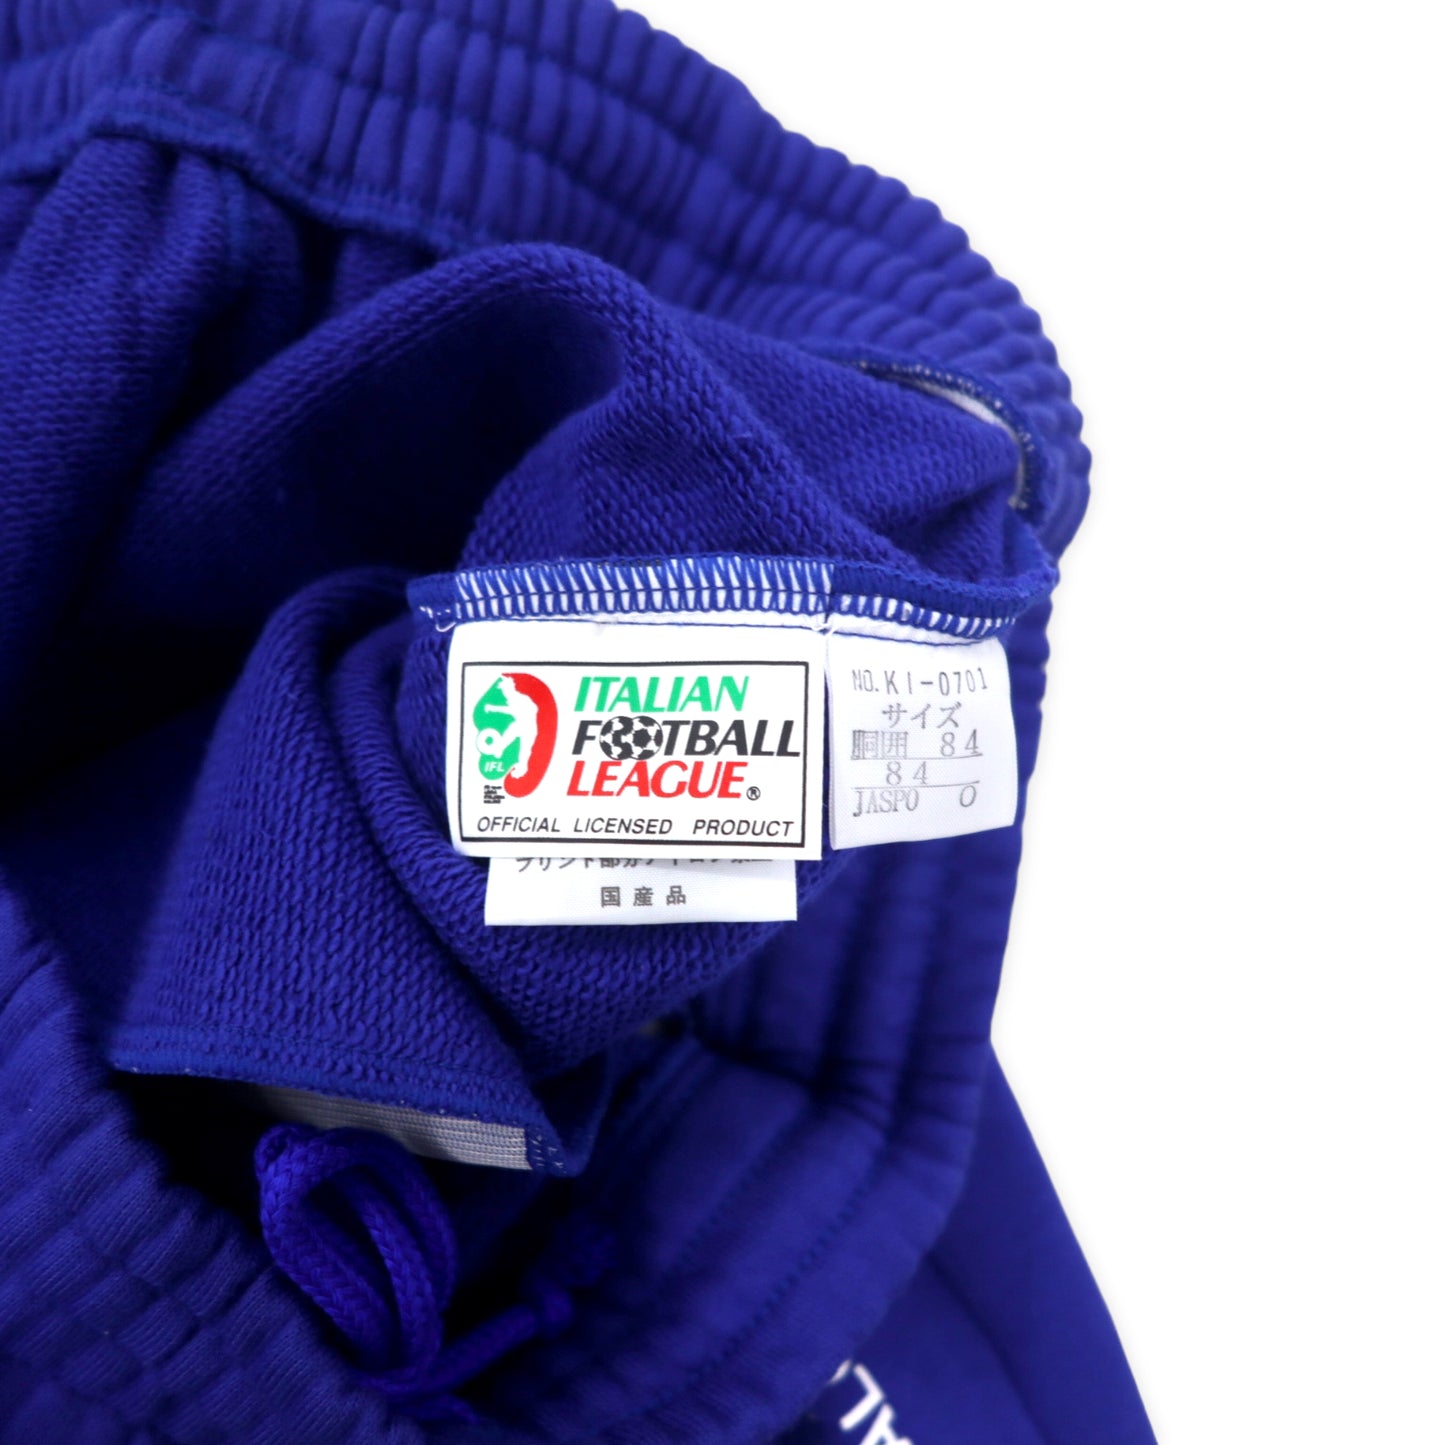 KAPPA 90年代 スウェットパンツ O ブルー ITALIAN FOOTBALL LEAGE コットン F.C. PARMA プリント 日本製 未使用品